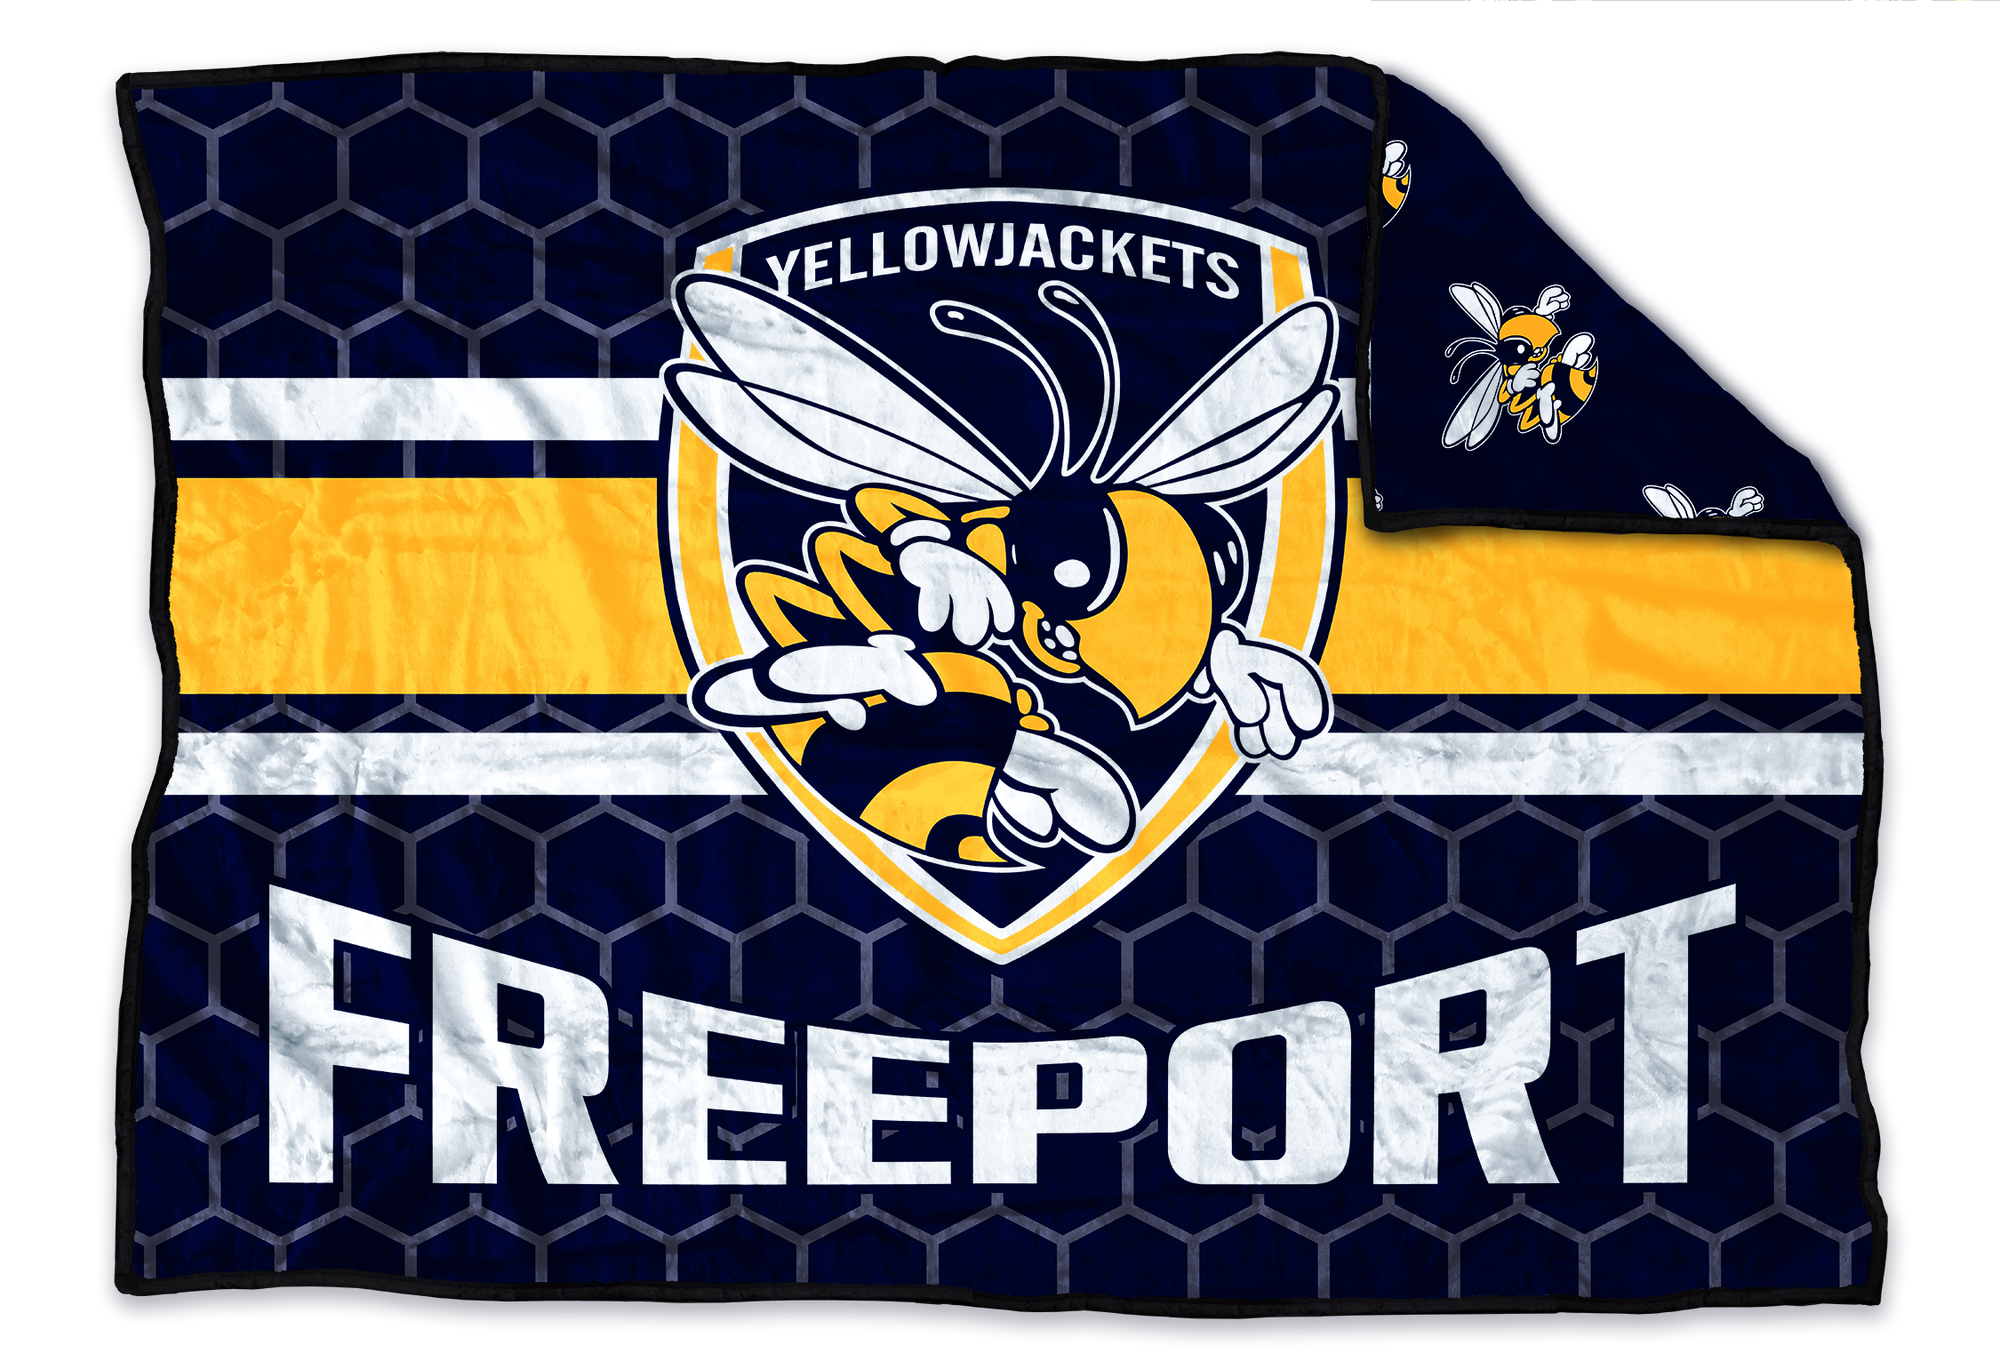 Freeport Yellowjackets